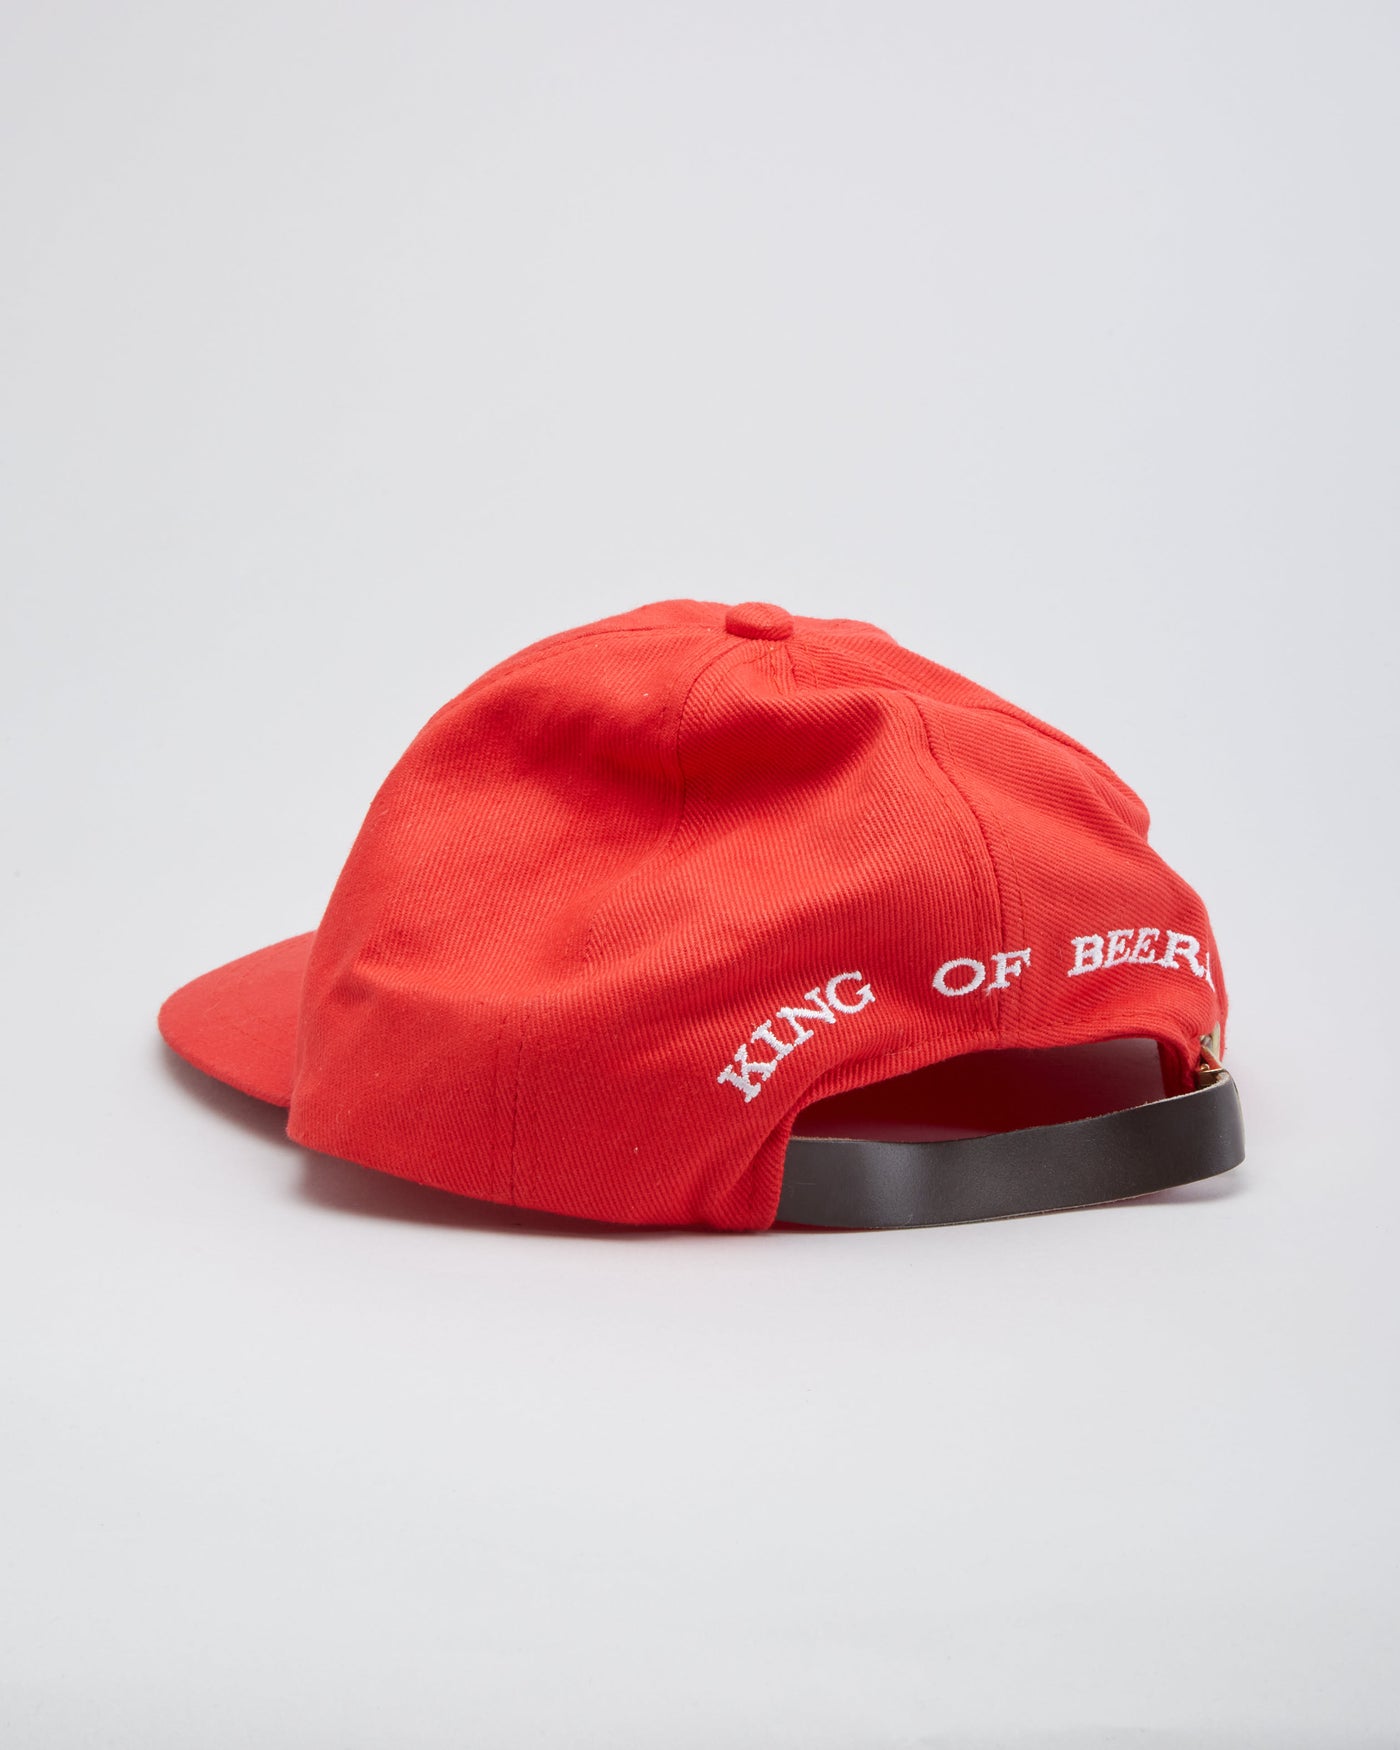 Budweiser King Of Beers Red Baseball Cap / Hat